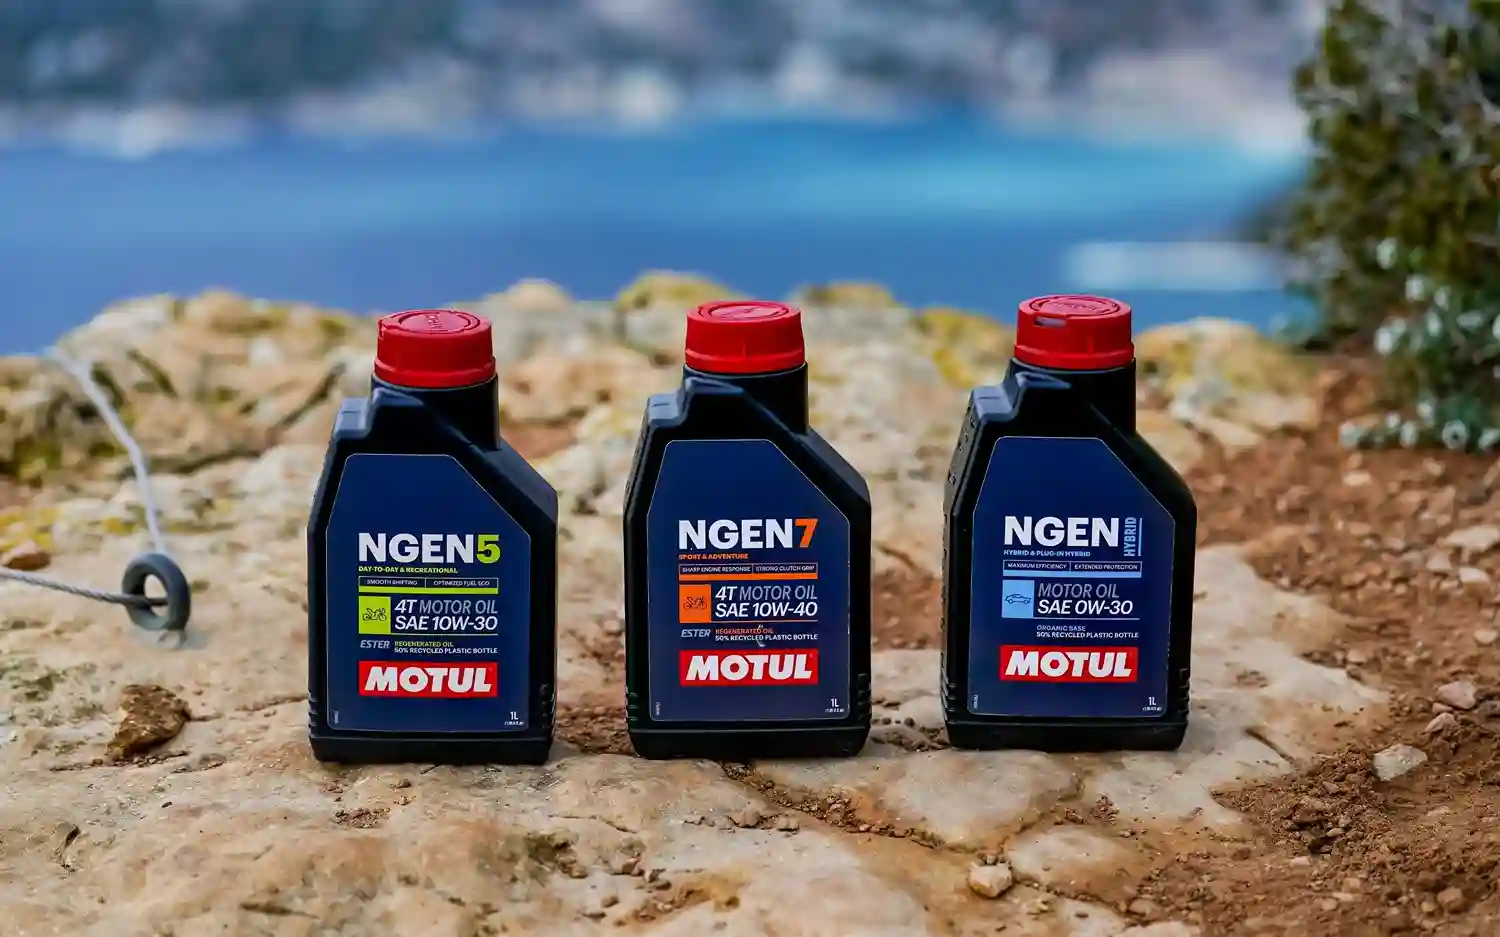 Motul NGEN 5 i NGEN 7 – nowe, ekologiczne oleje do motocykli